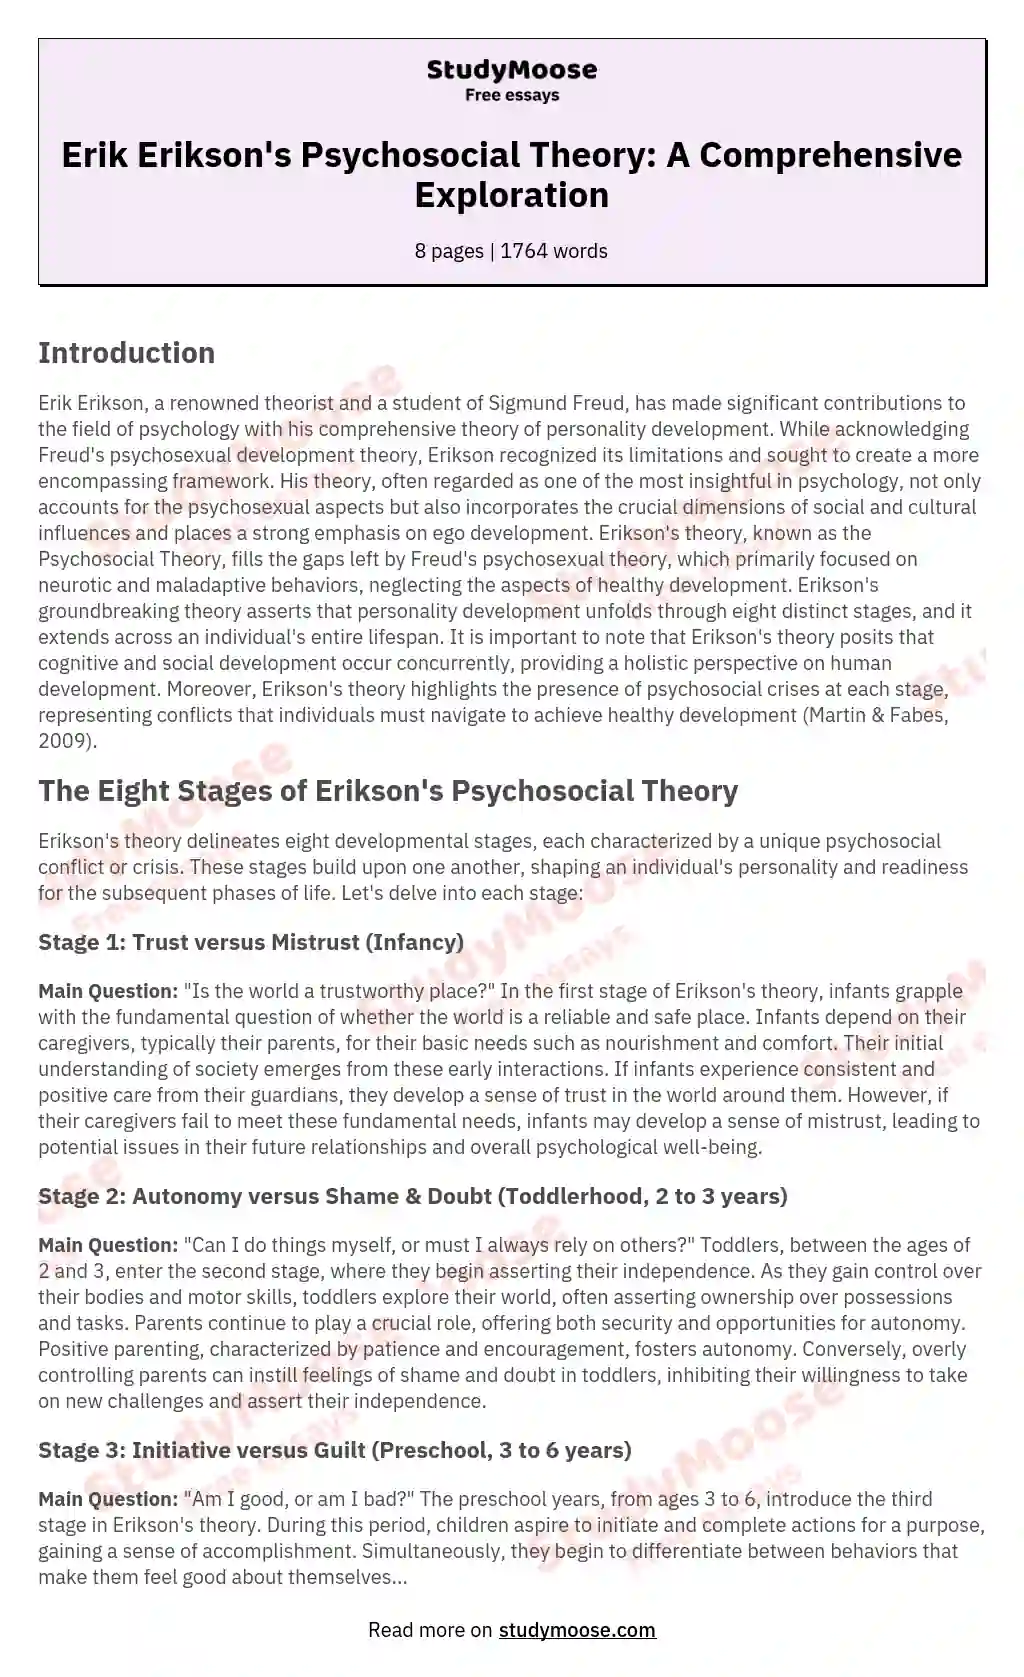 Erik Erikson's Psychosocial Theory: A Comprehensive Exploration essay